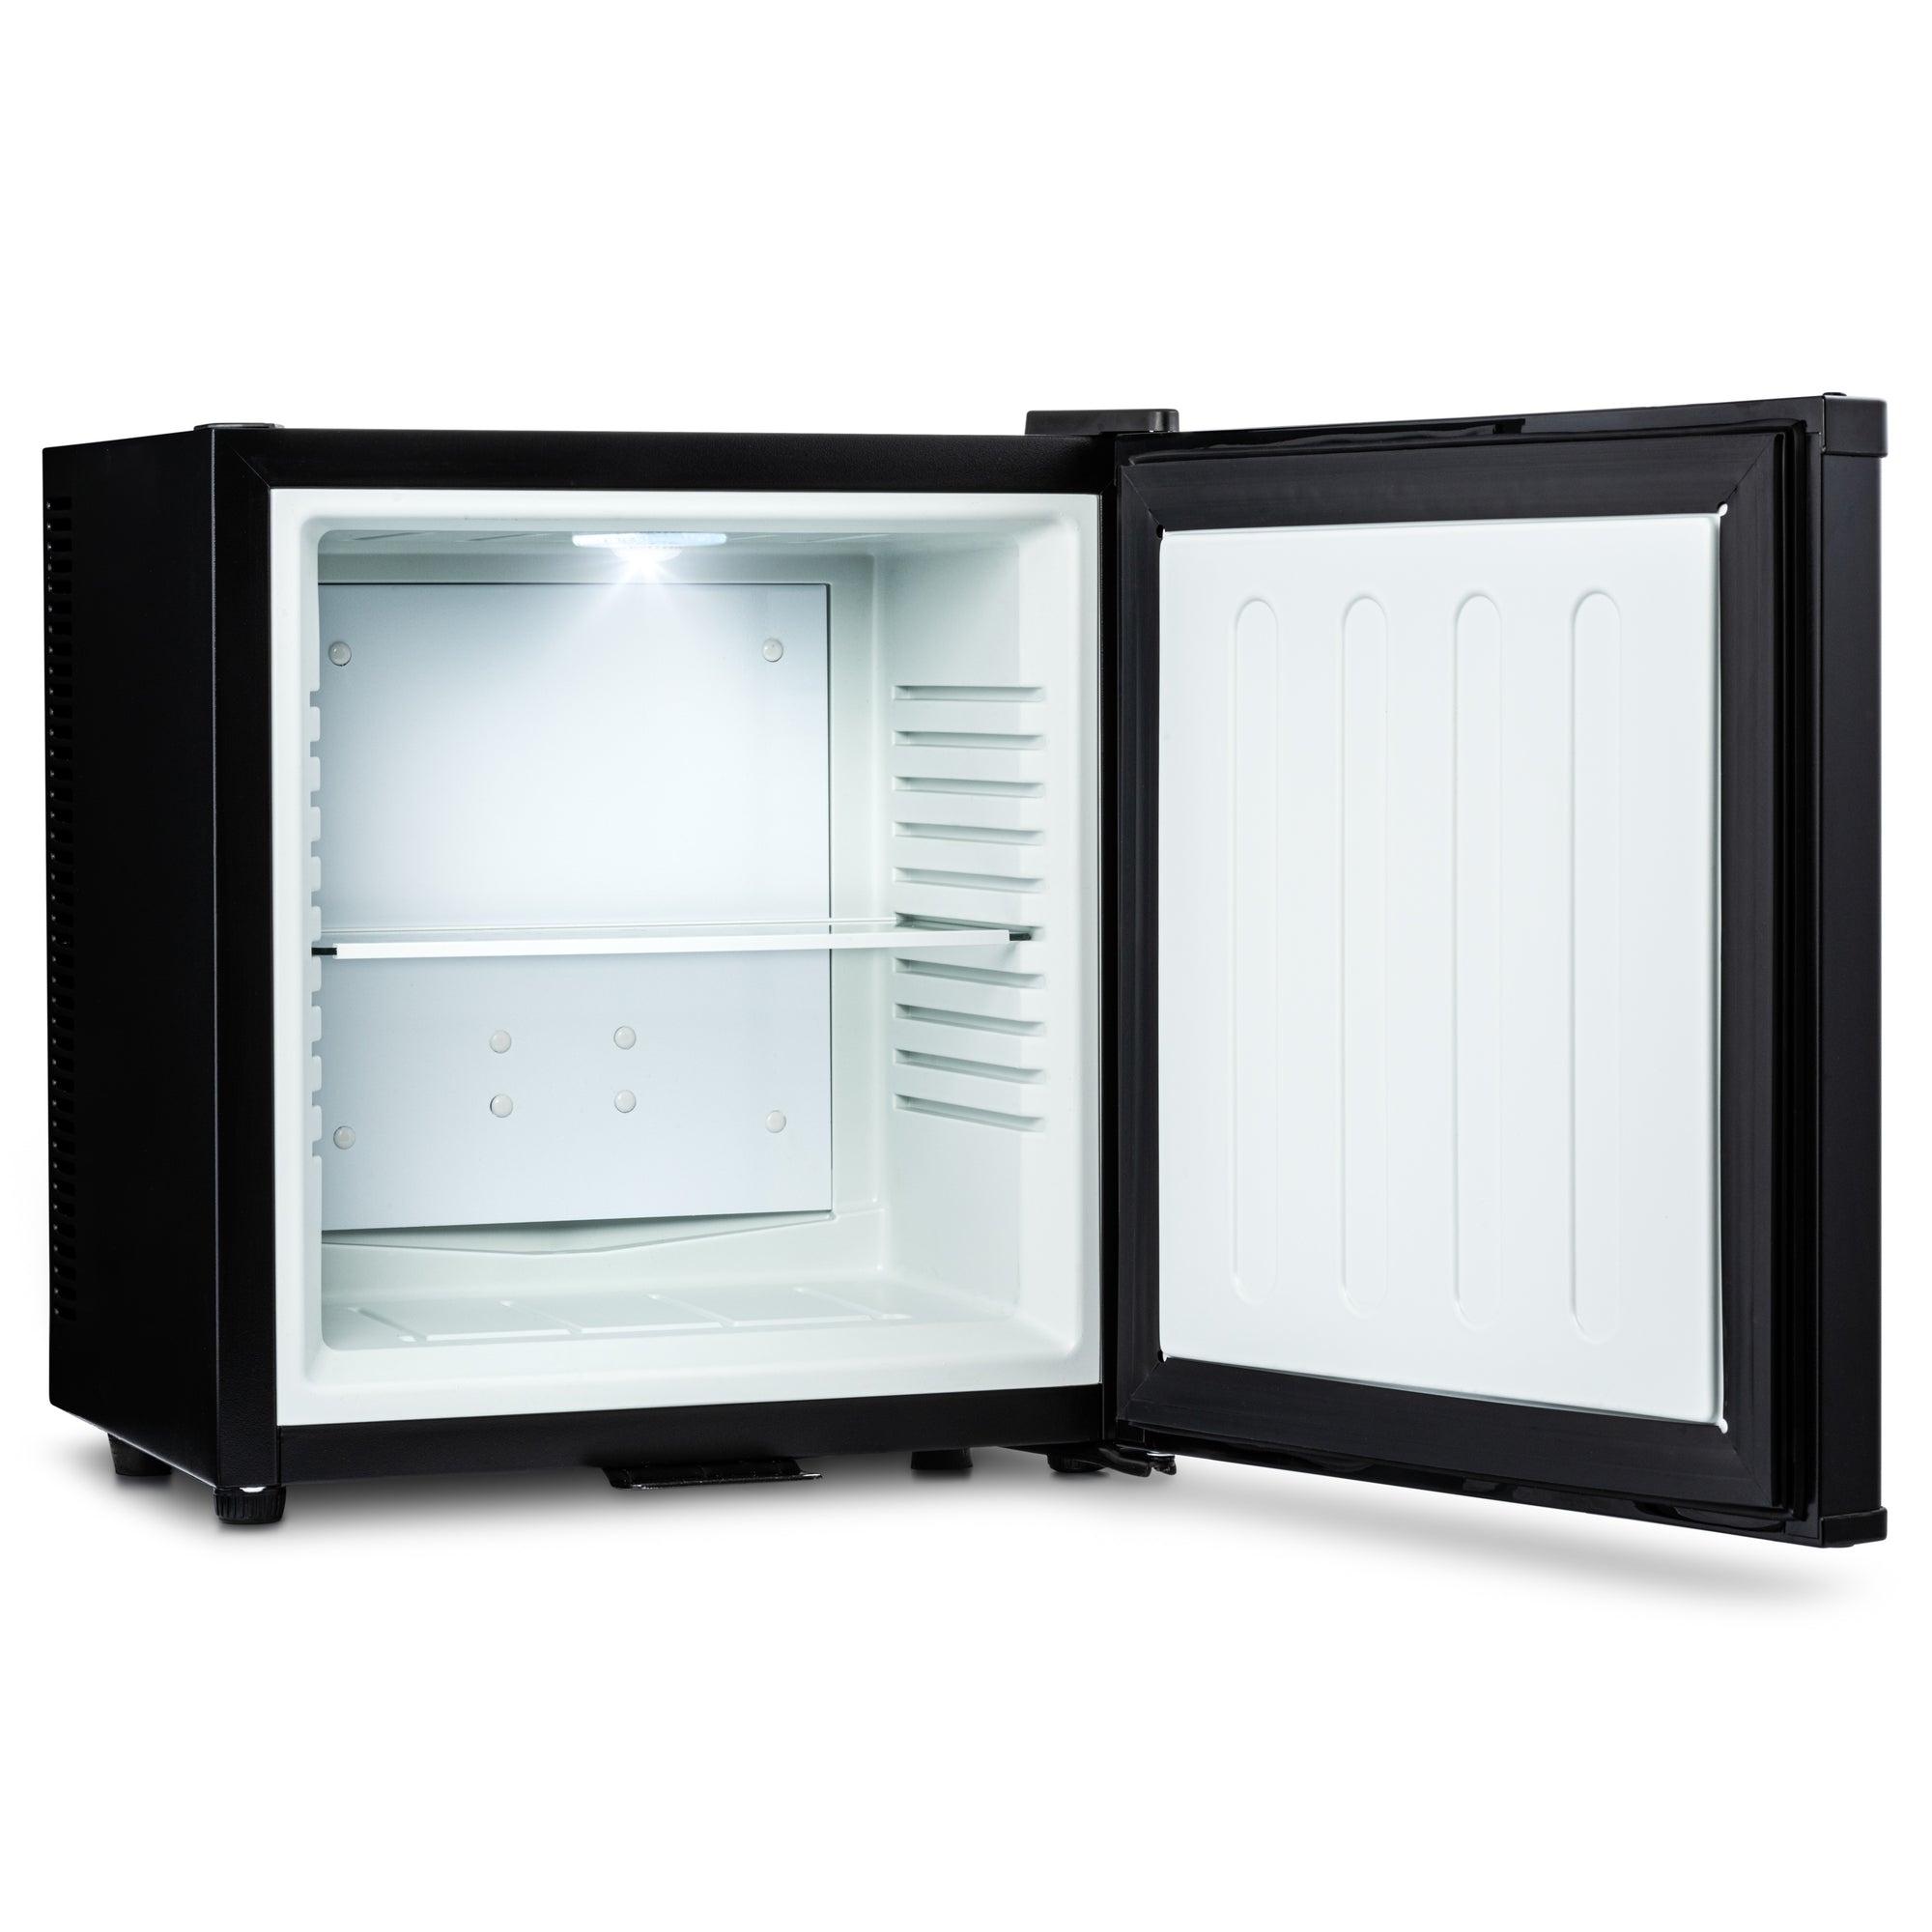 Mini bar fridge with flexible storage